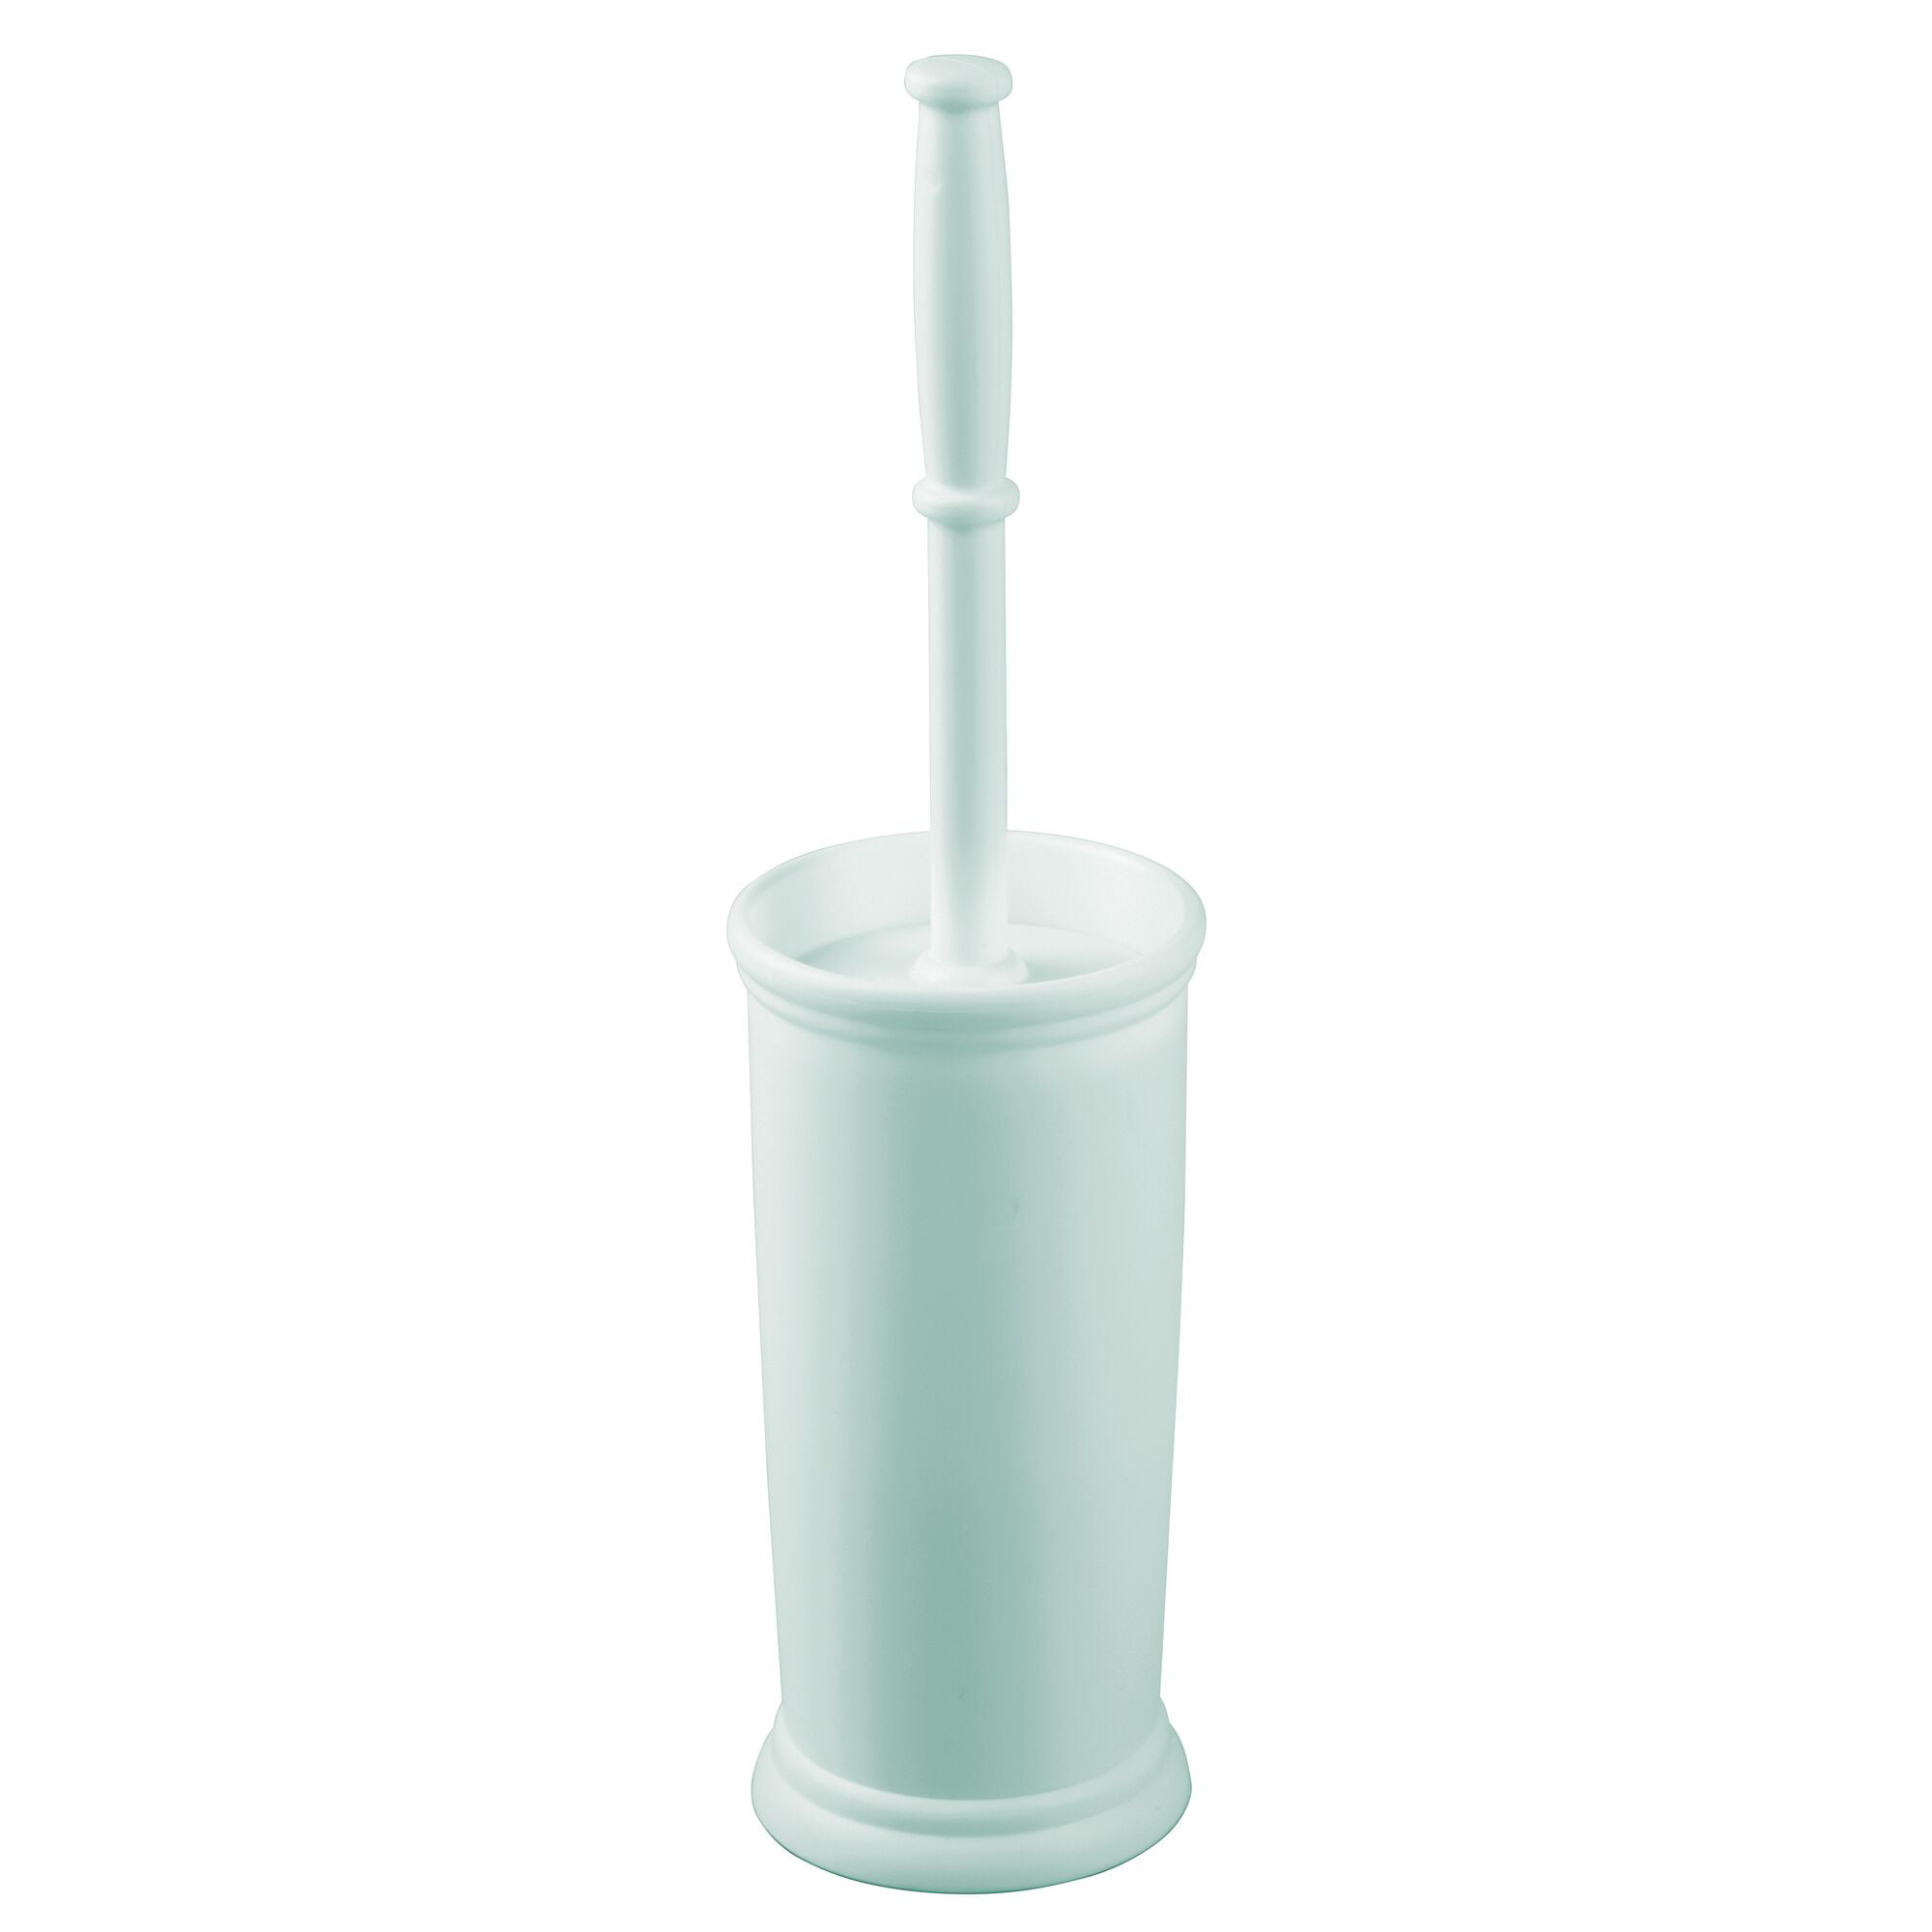 mDesign Toilet Brush with Holder Bronze Plastic Free Standing Toilet Brush Set Includes Hygienic Toilet Brush Holder and Brush 